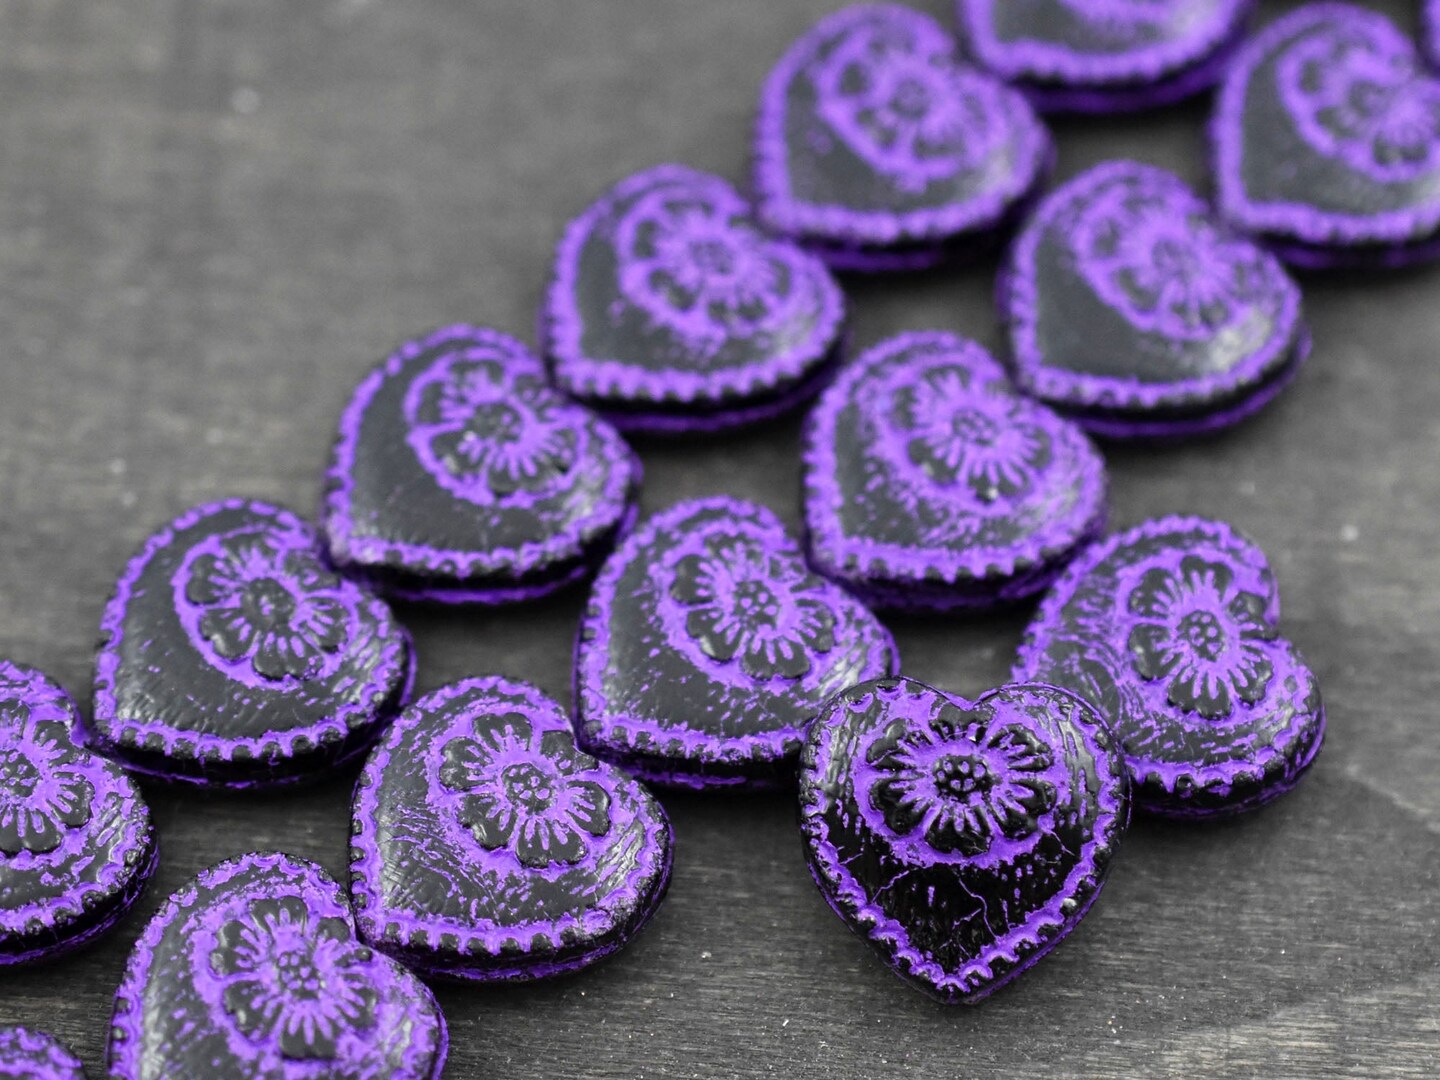 *4* 17mm Purple Washed Jet Black Floral Heart Beads